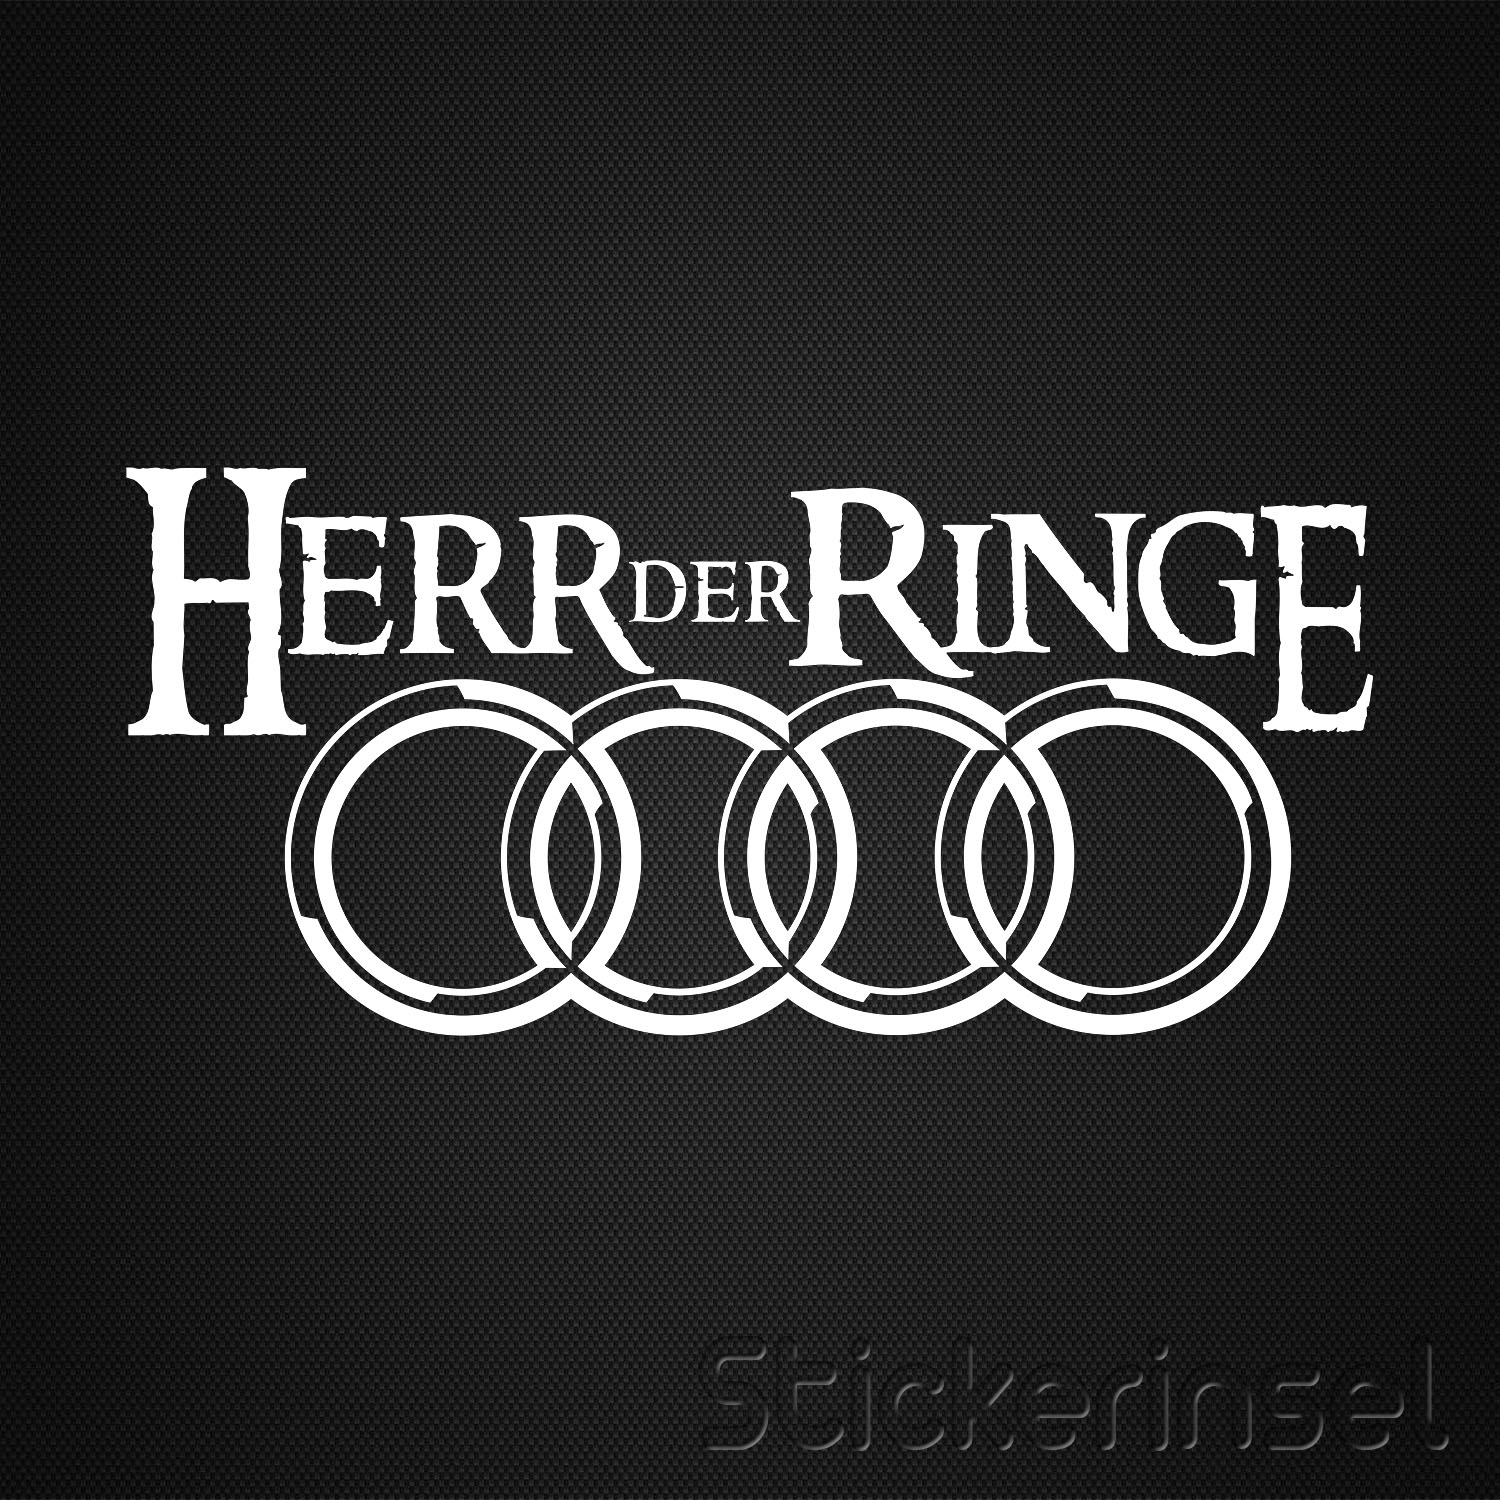 Aufkleber Audi Sticker